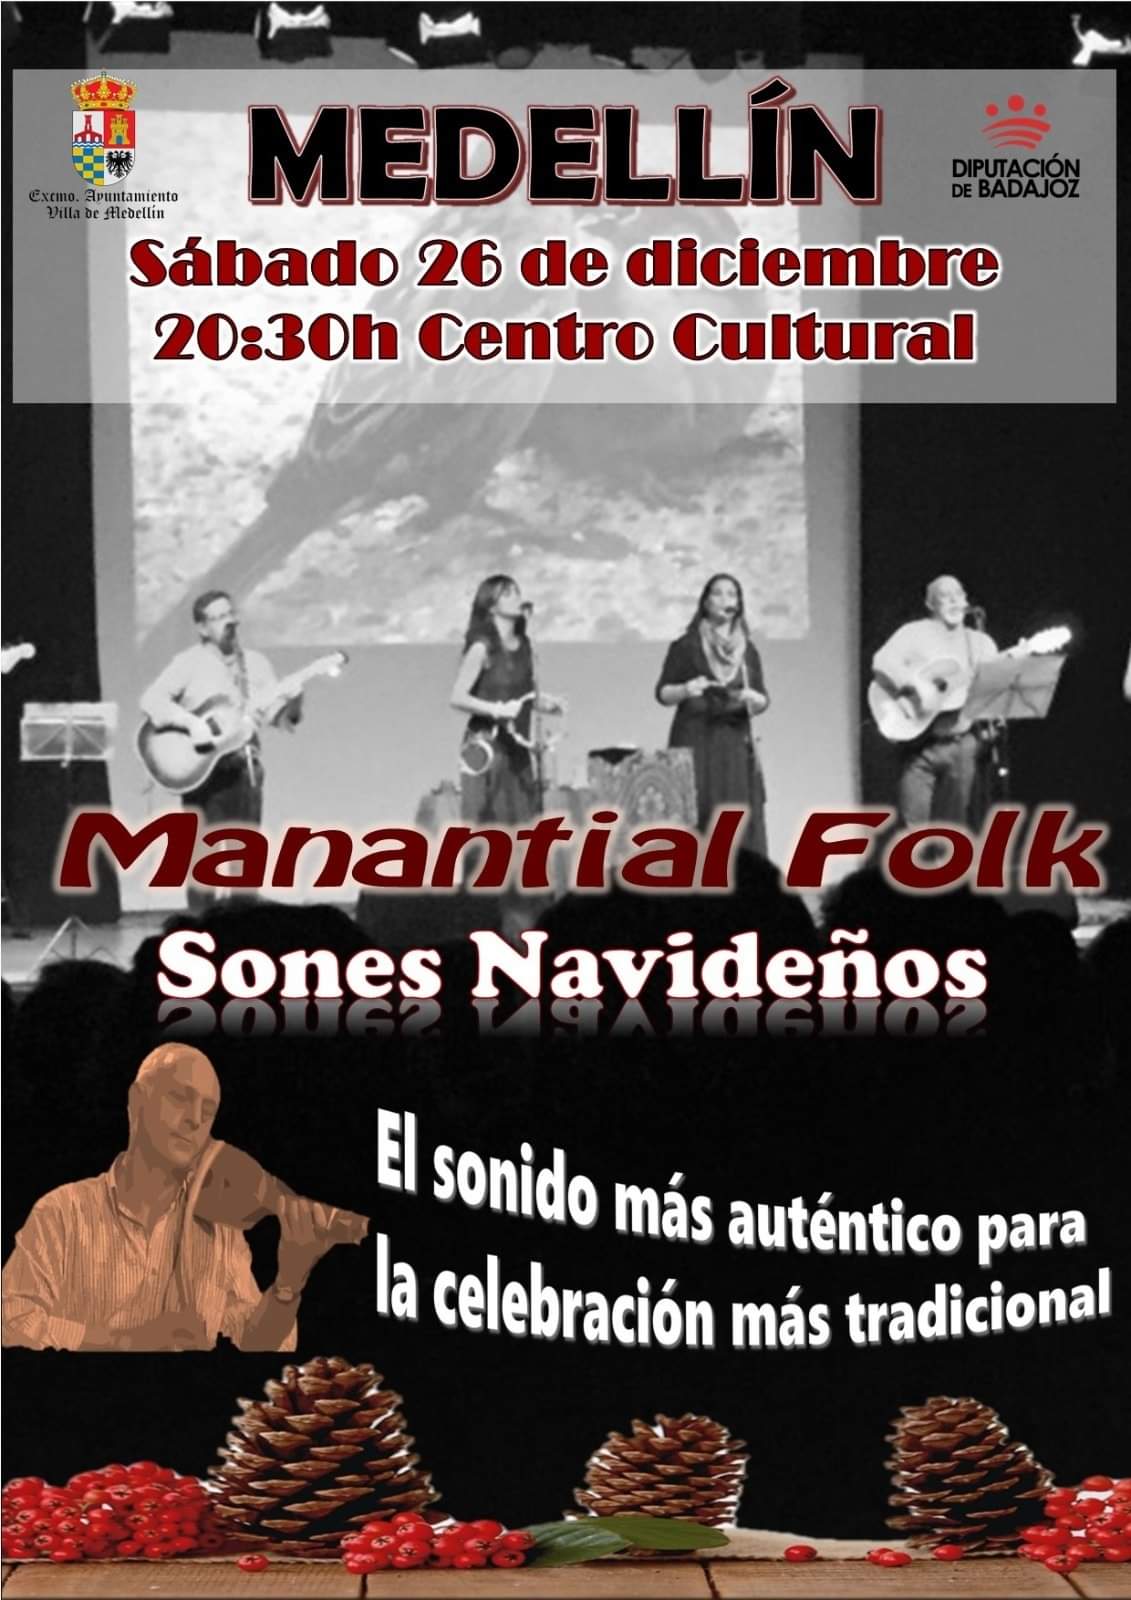 Manantial Folk (2020) - Medellín (Badajoz)